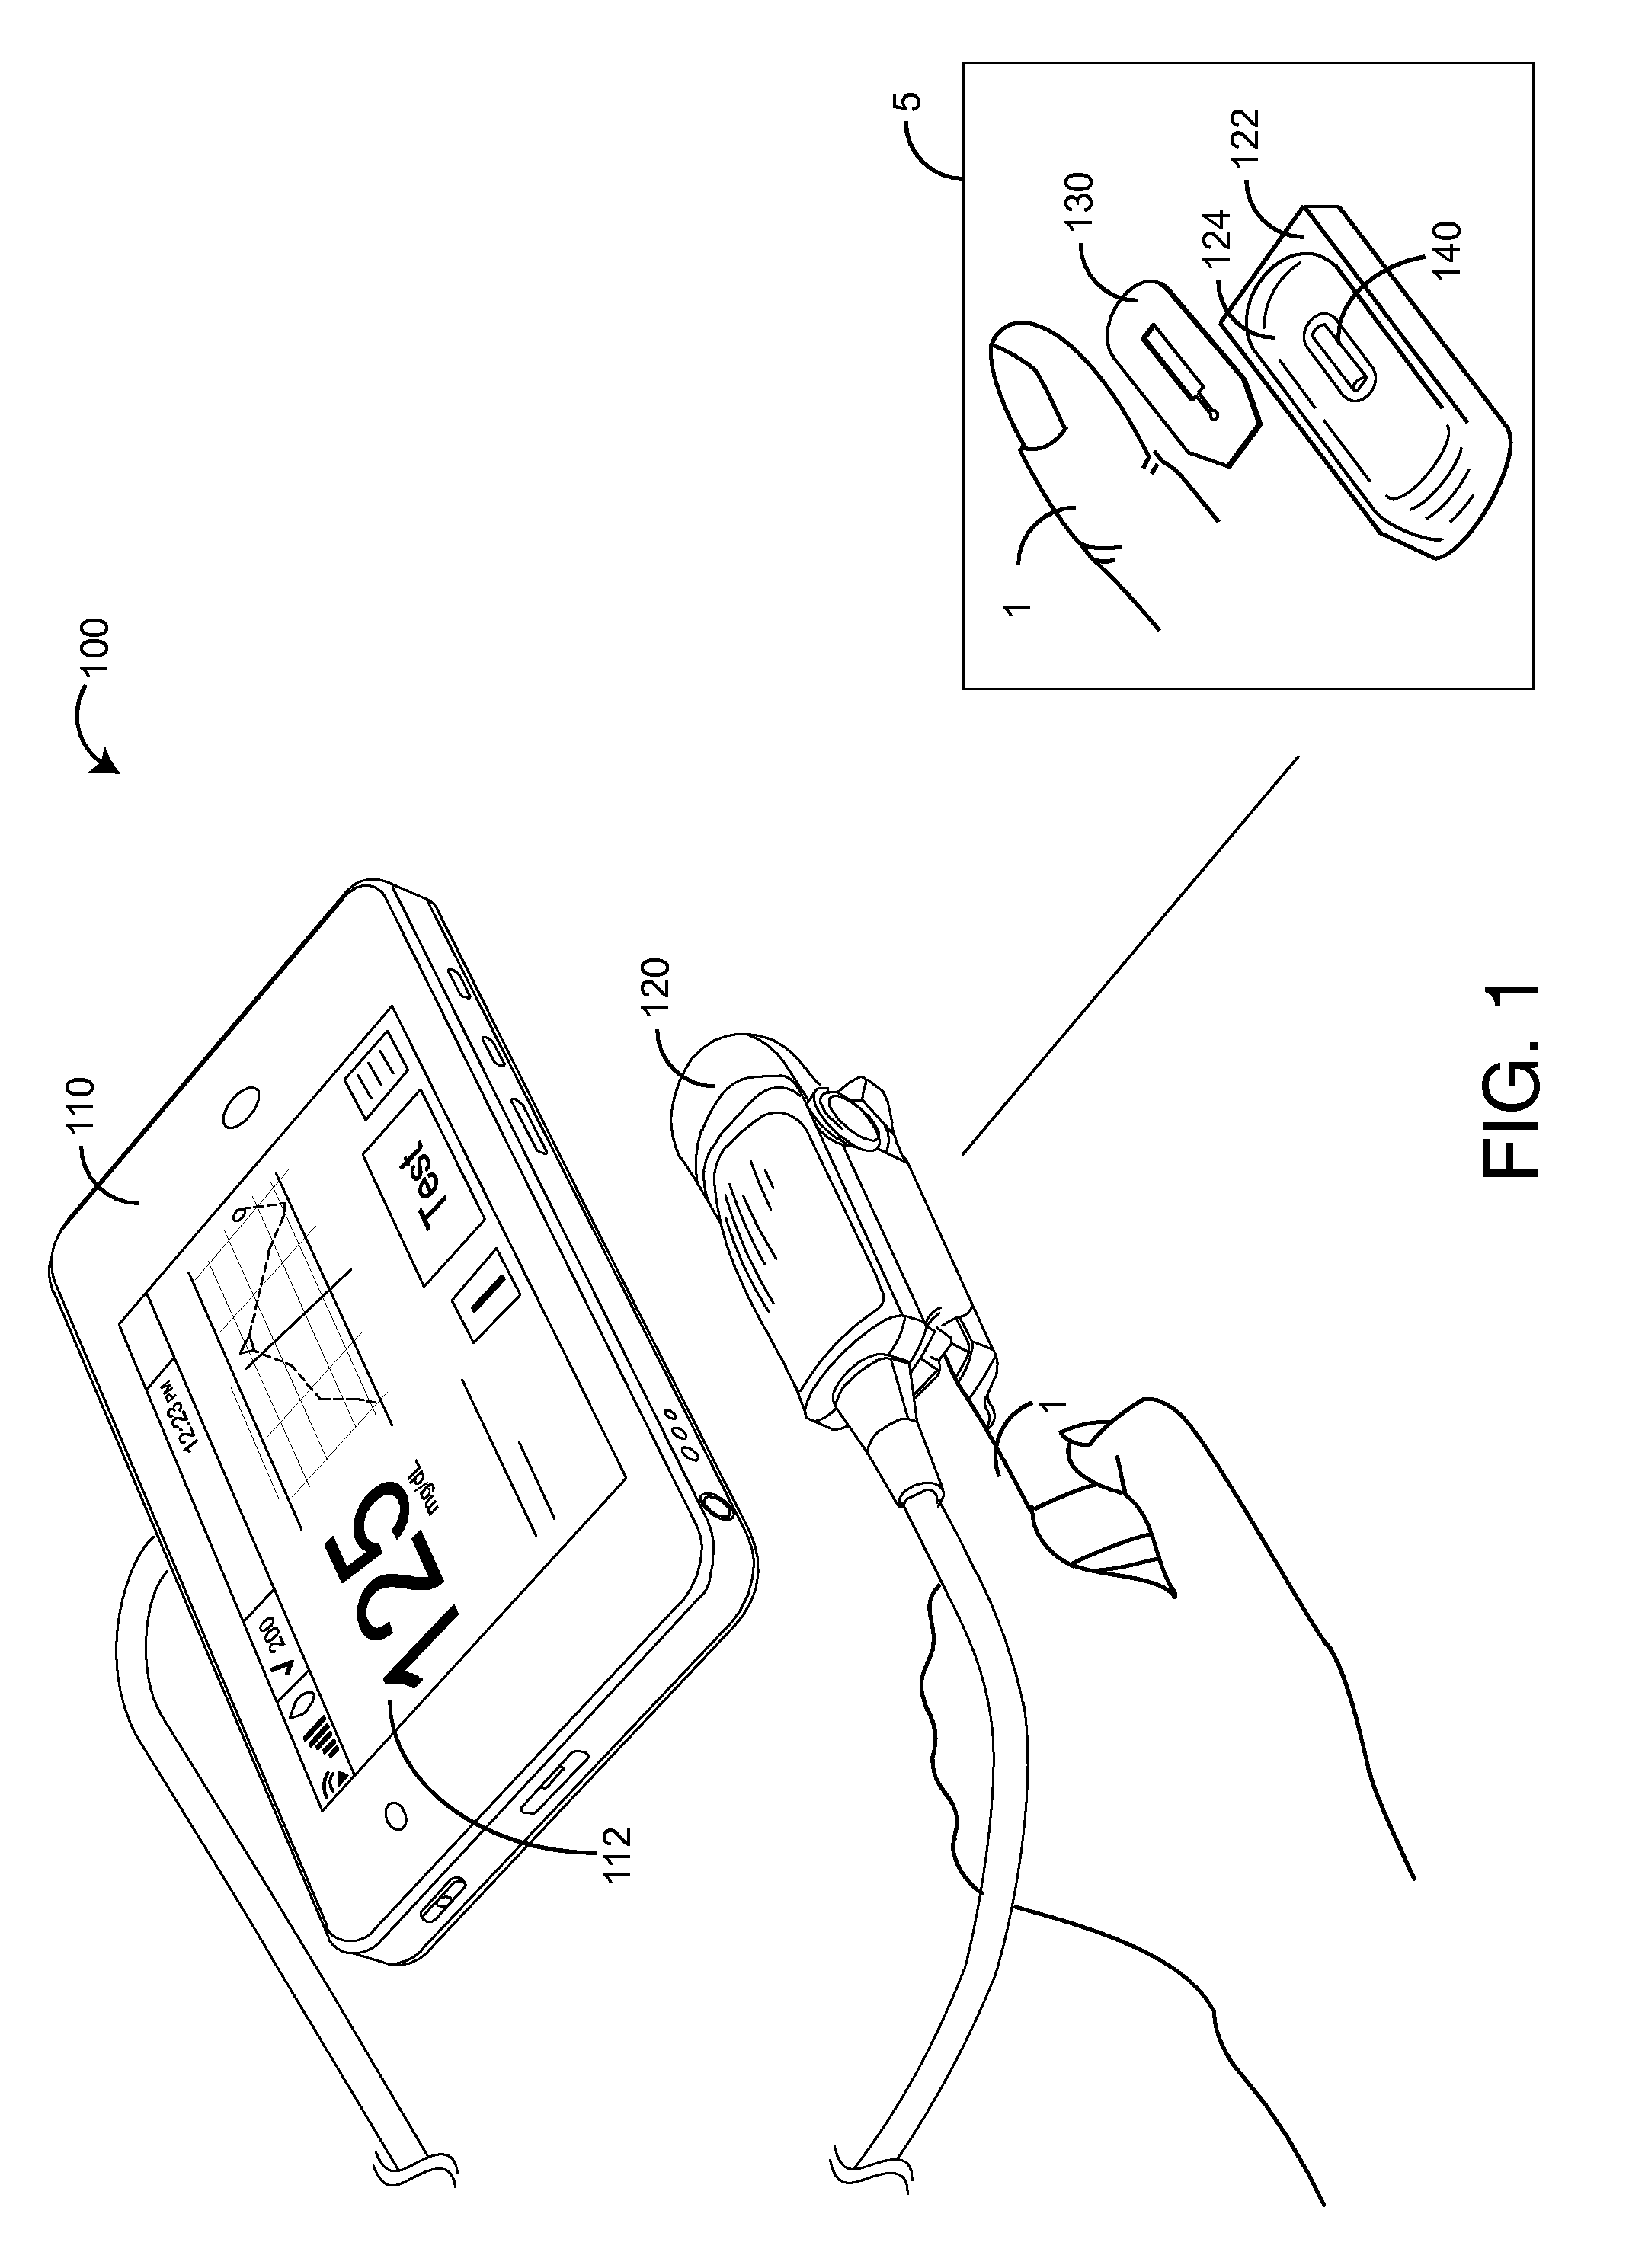 Finger-placement sensor tape